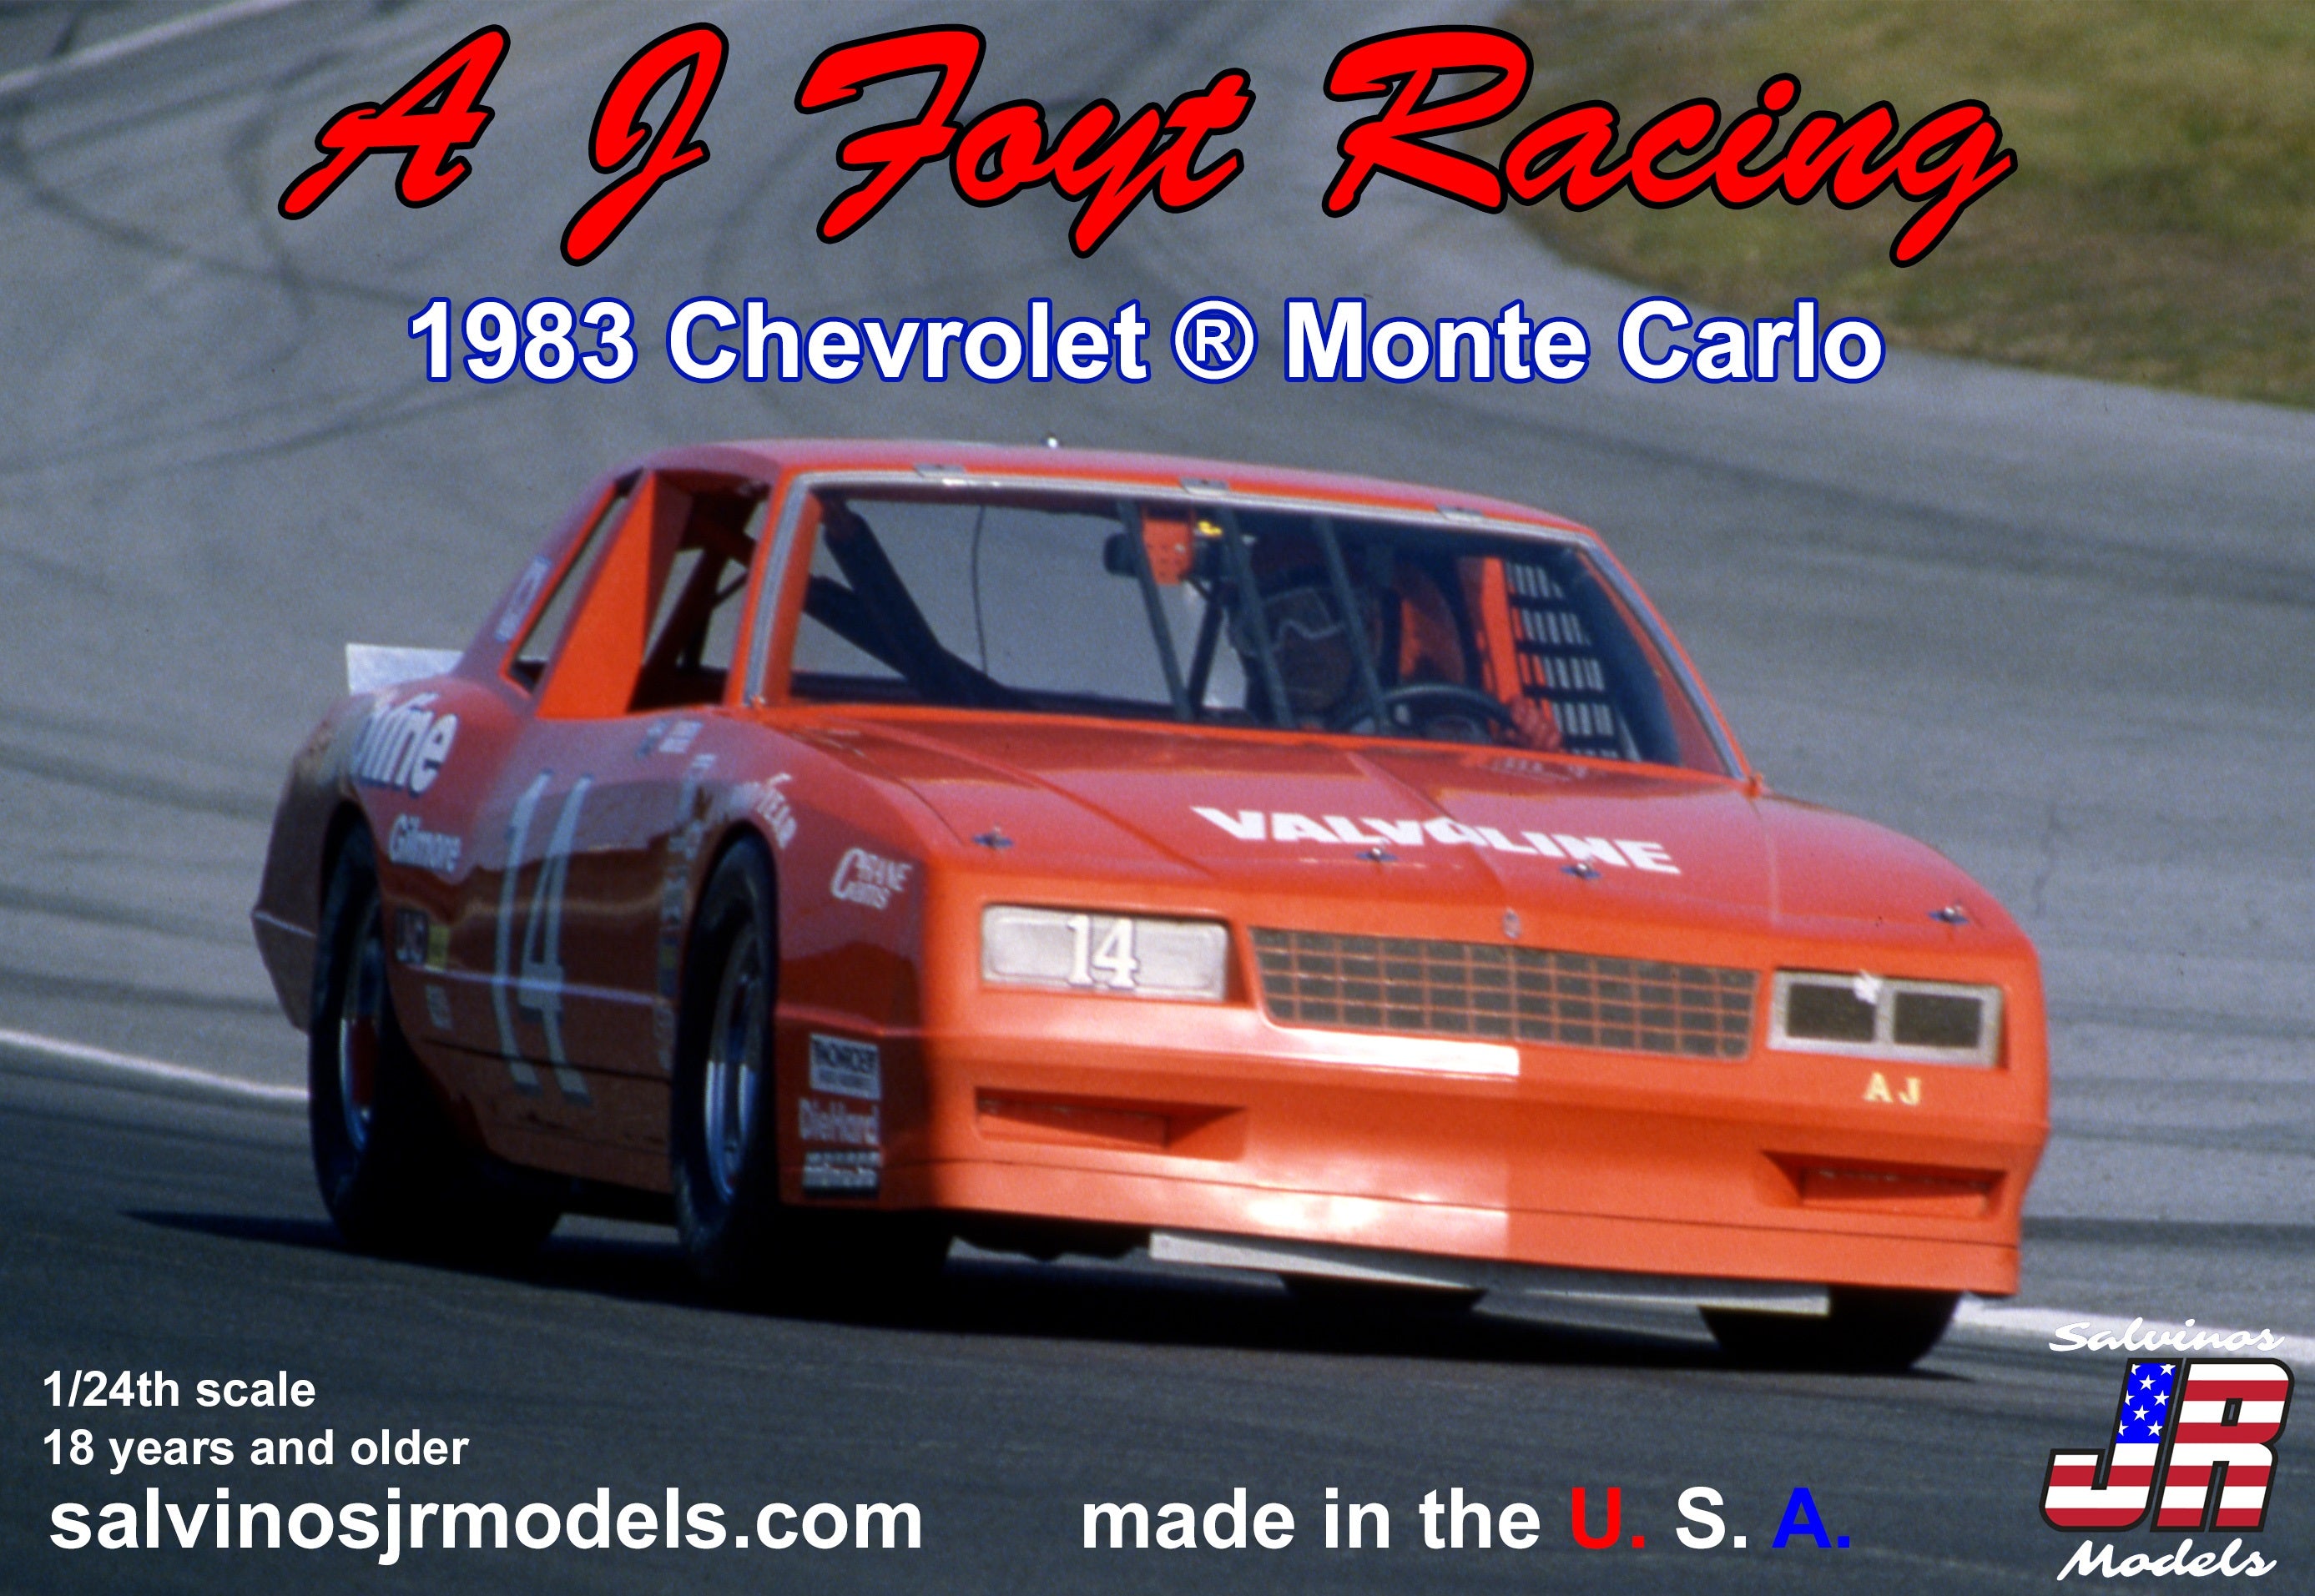 Salvinos JR Models AJMC1983D AJ Foyt Racing 1983 #14 Chevrolet Monte Carlo 1/24 Scale Model Kit